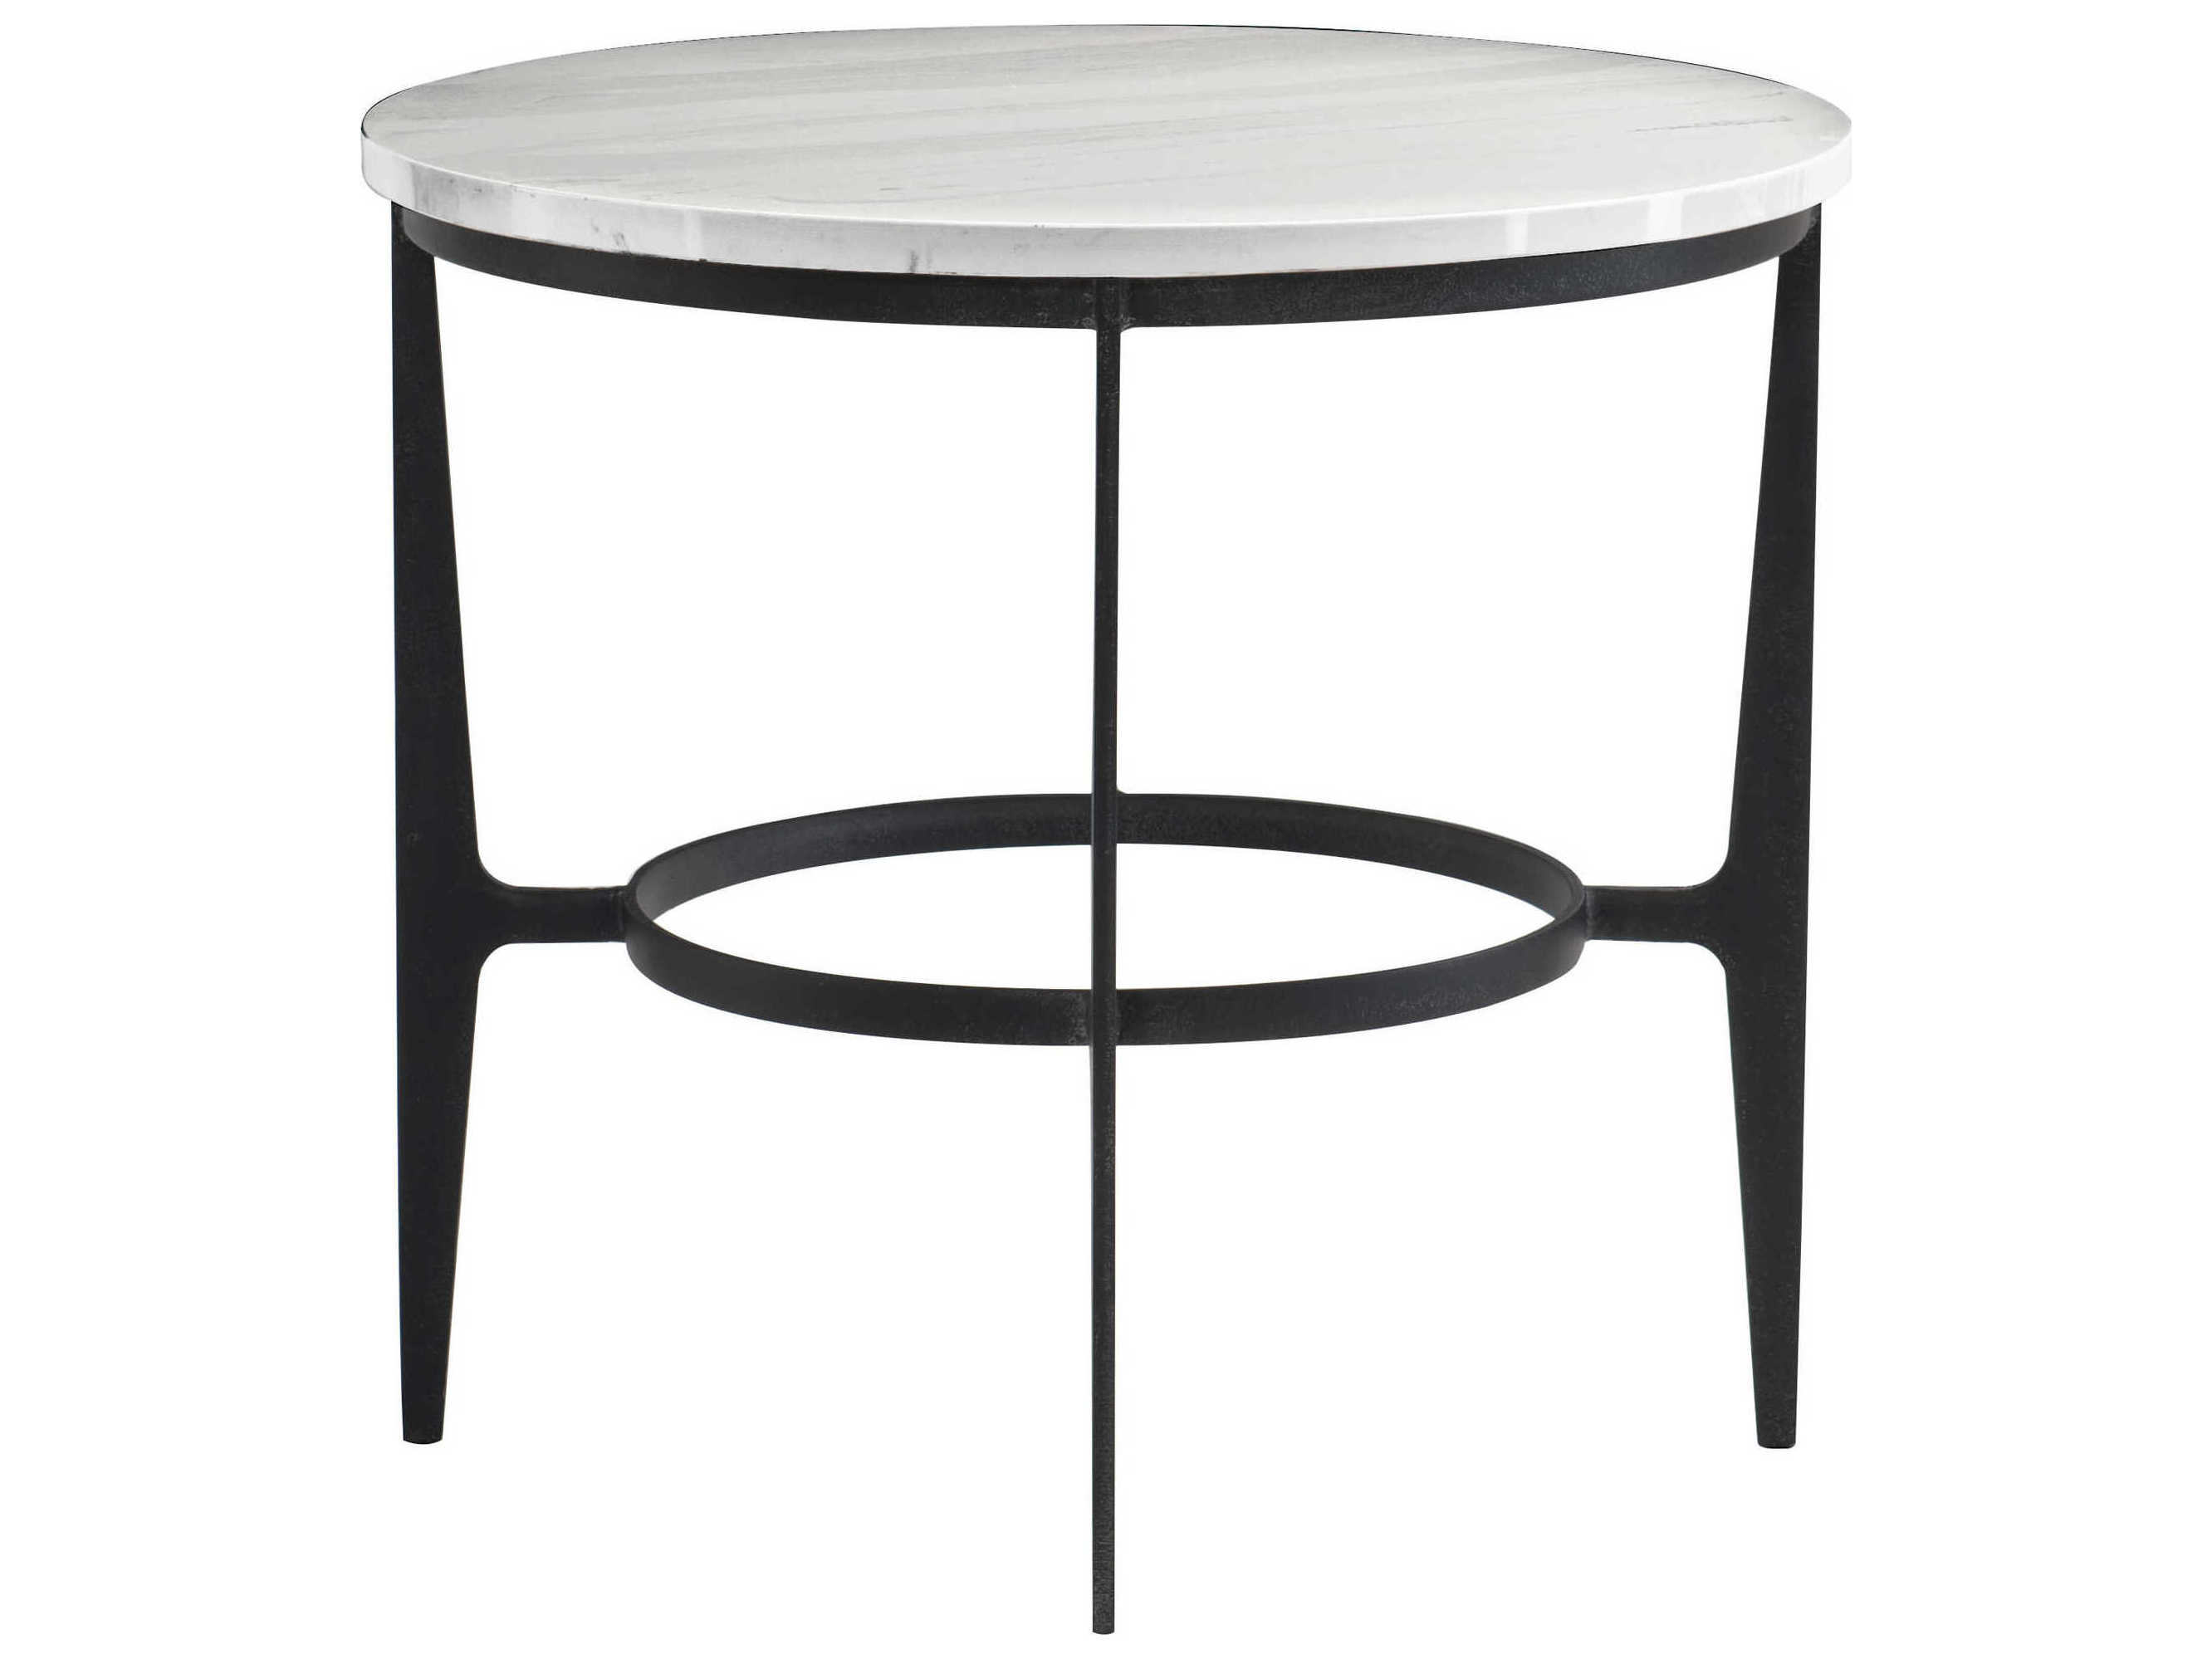 26 round. Приставной столик круглый металлический. Приставной столик стальной круглый. Стол Bernhardt. Прикроватный столик из металла круглый.